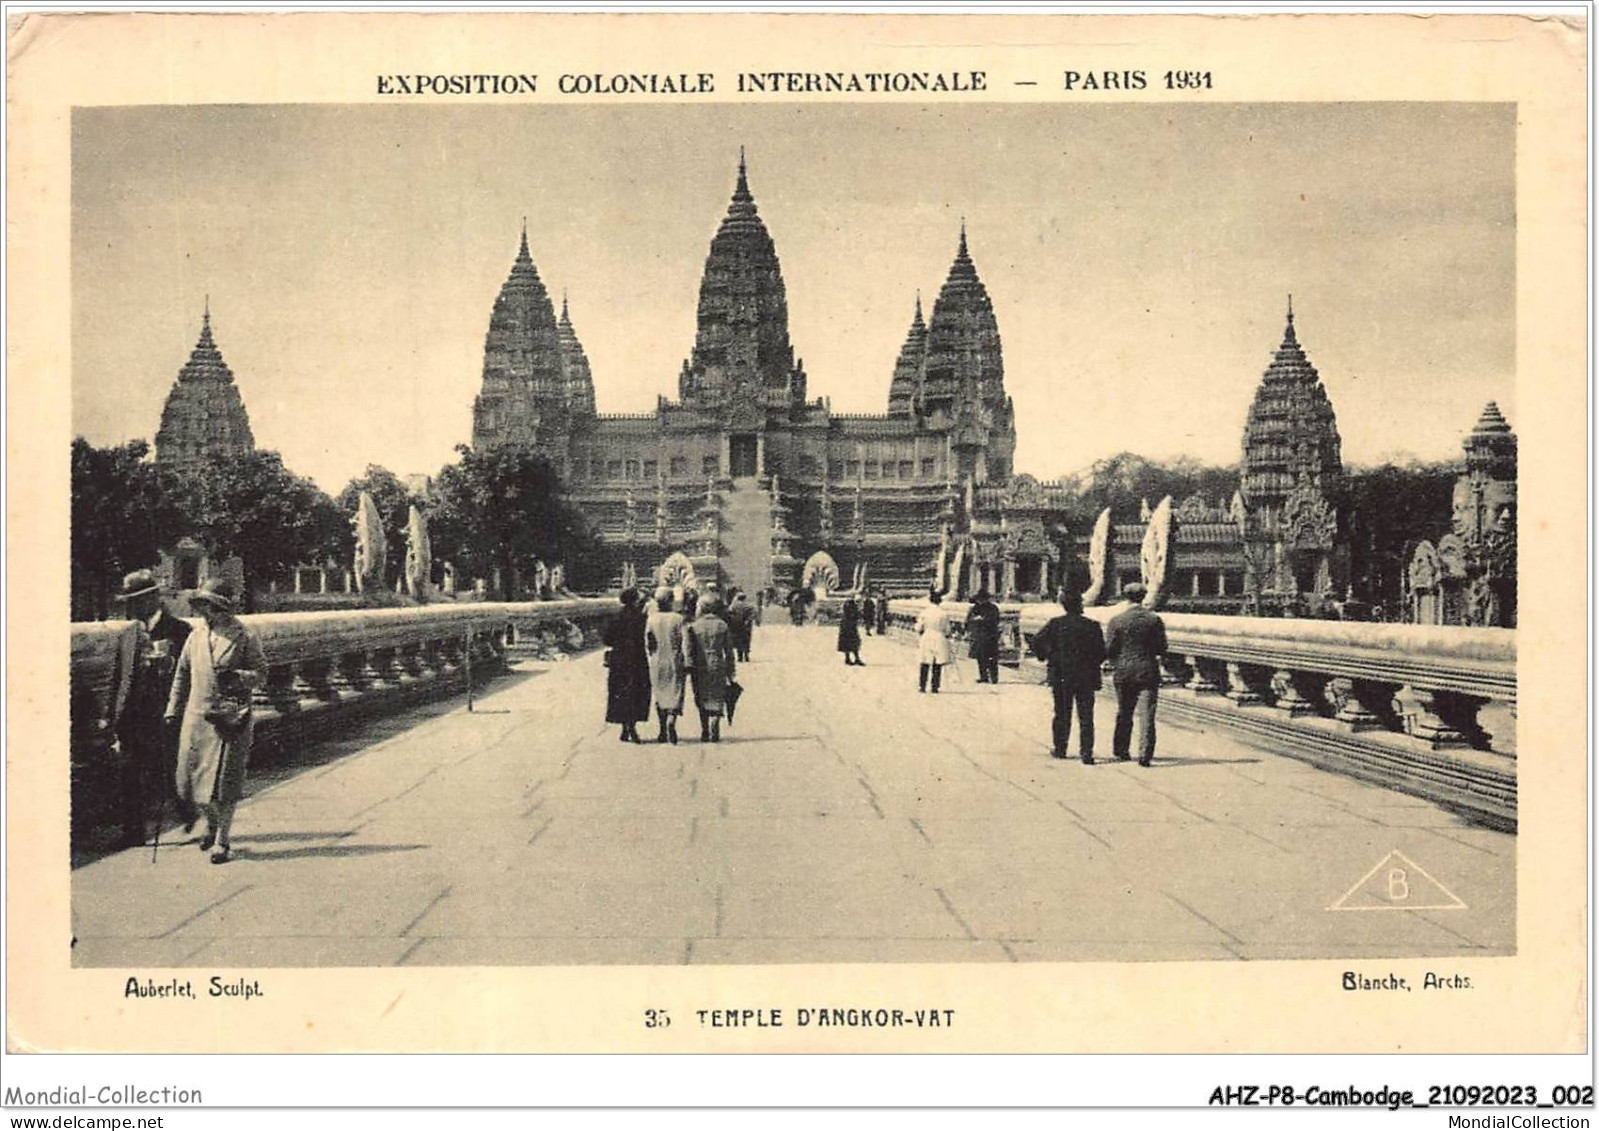 AHZP8-CAMBODGE-0684 - EXPOSITION COLONIALE INTERNATIONALE - PARIS 1931 - TEMPLE D'ANGKOR-VAT - Cambodge